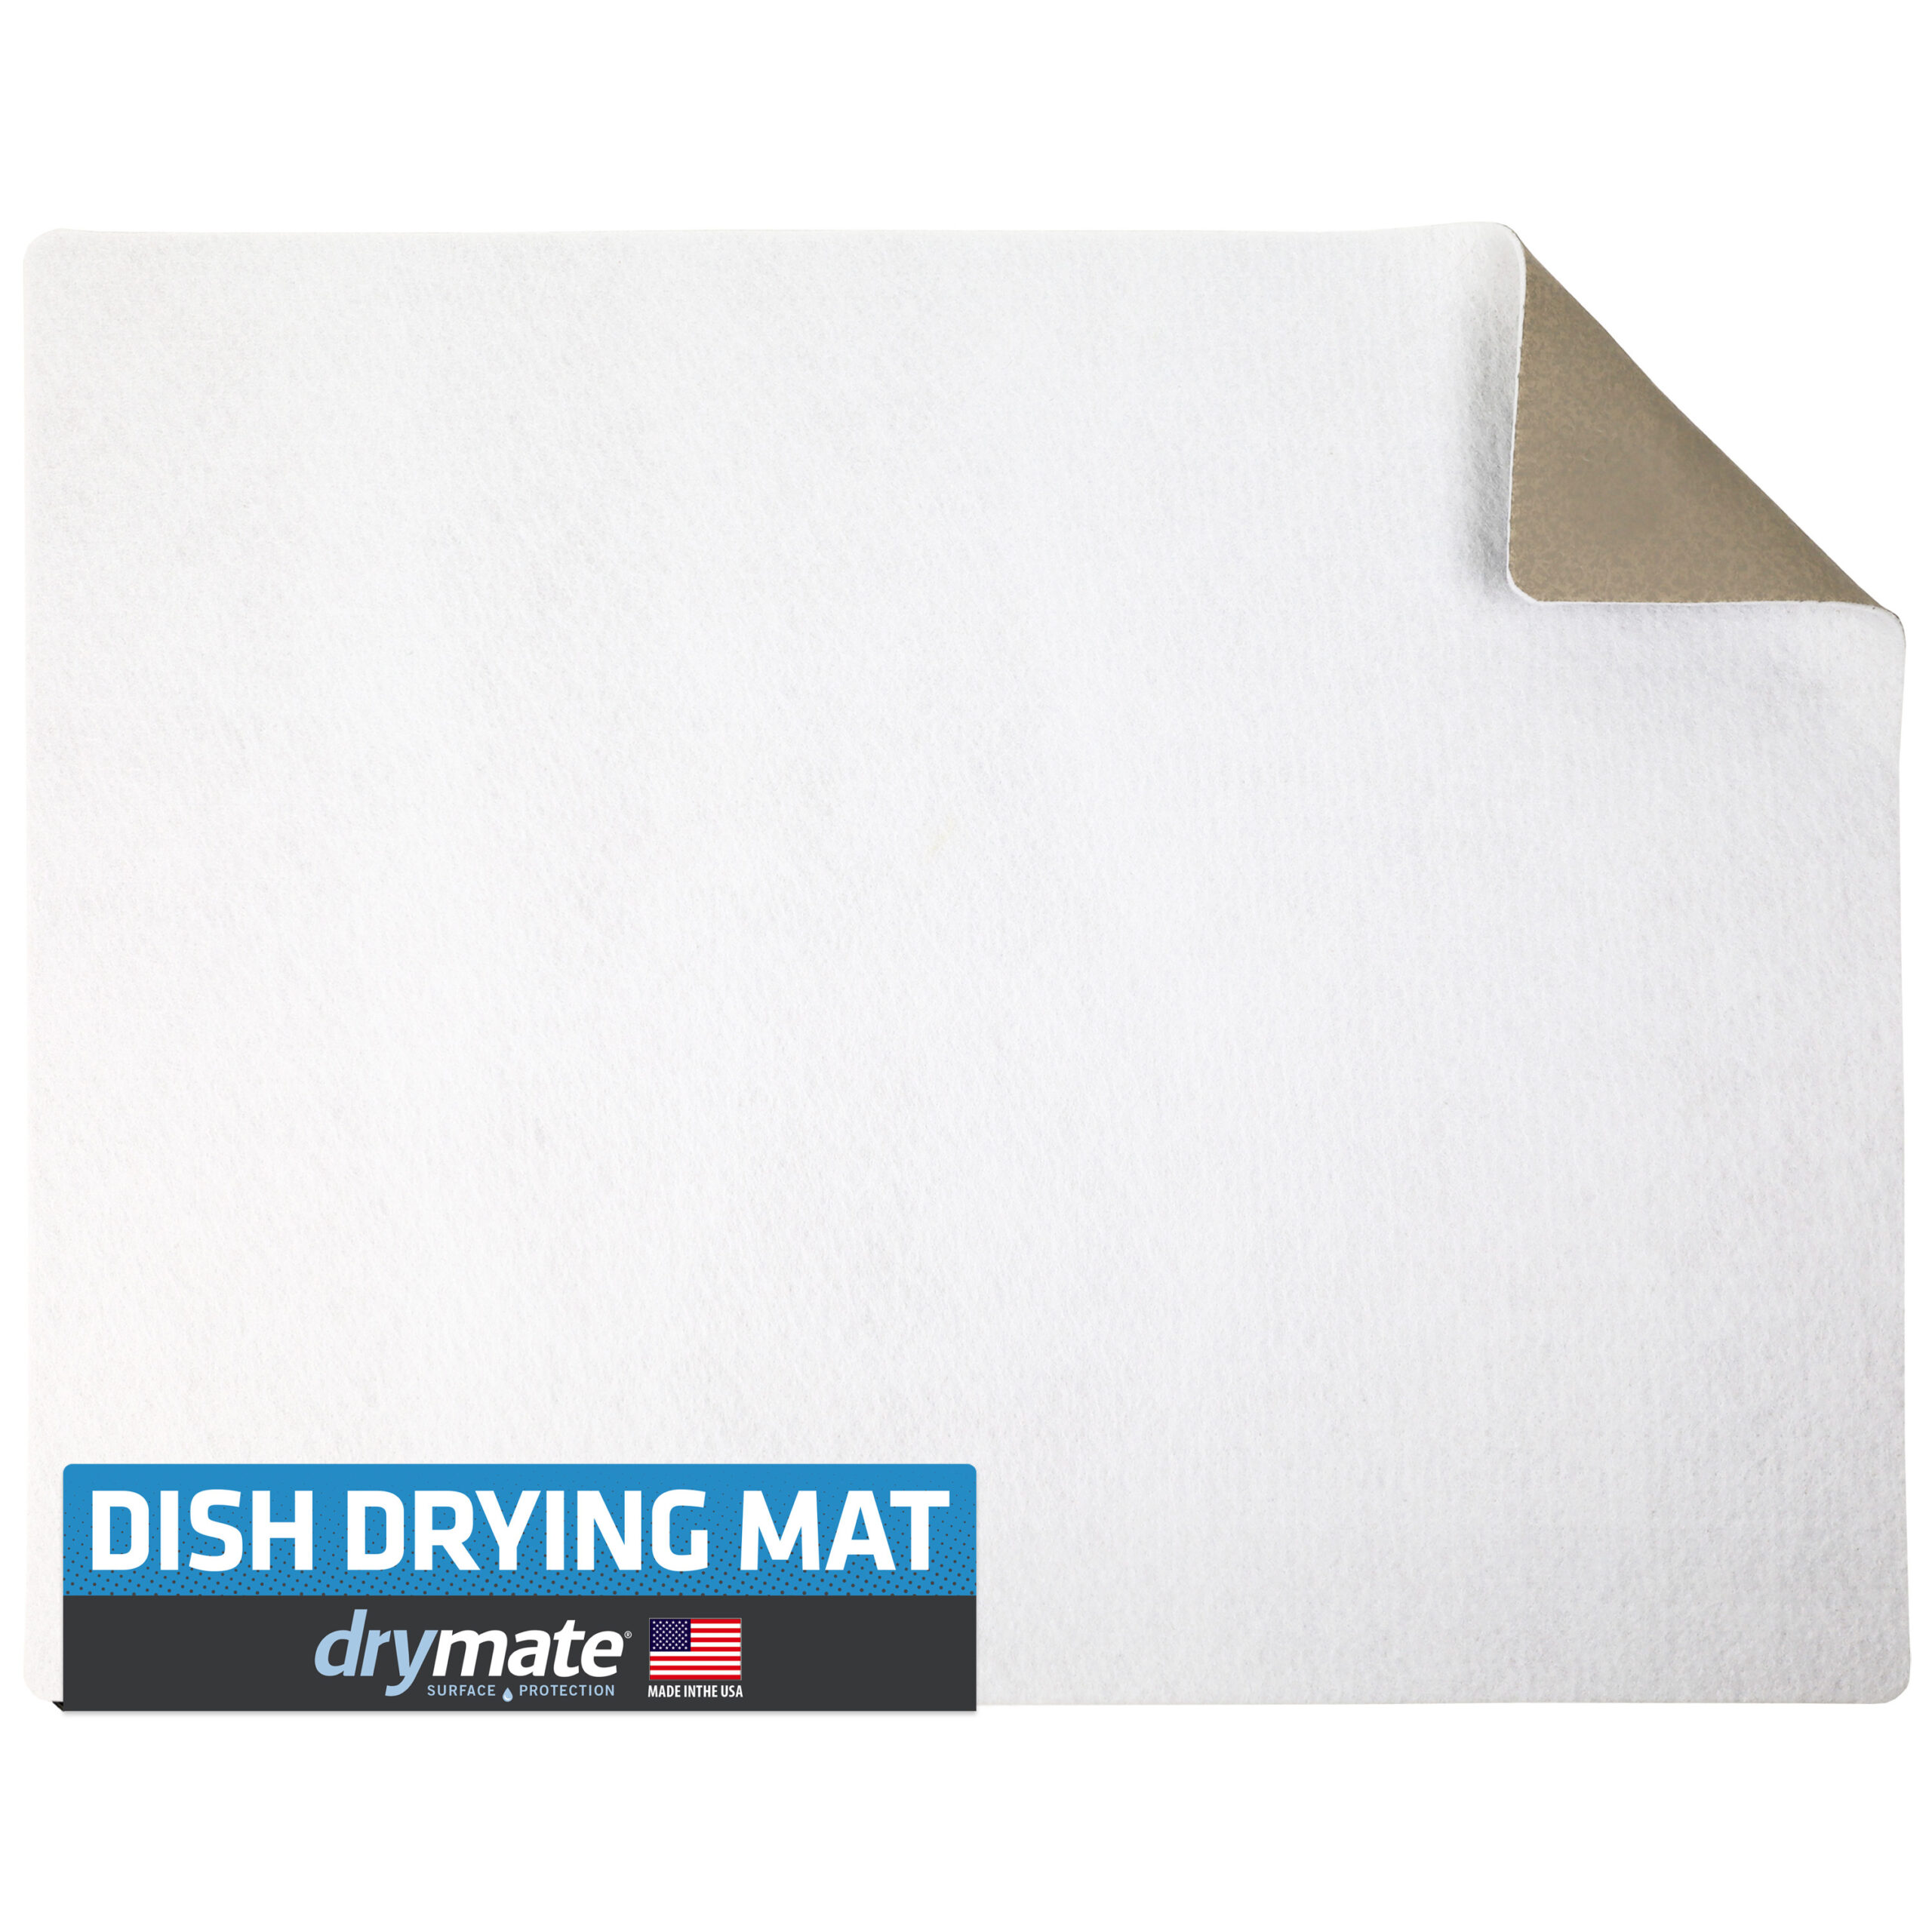 https://drymate.com/wp-content/uploads/2015/07/1-White_Dish-Drying-Mat_Flipped-Corner_Label-1-scaled.jpg